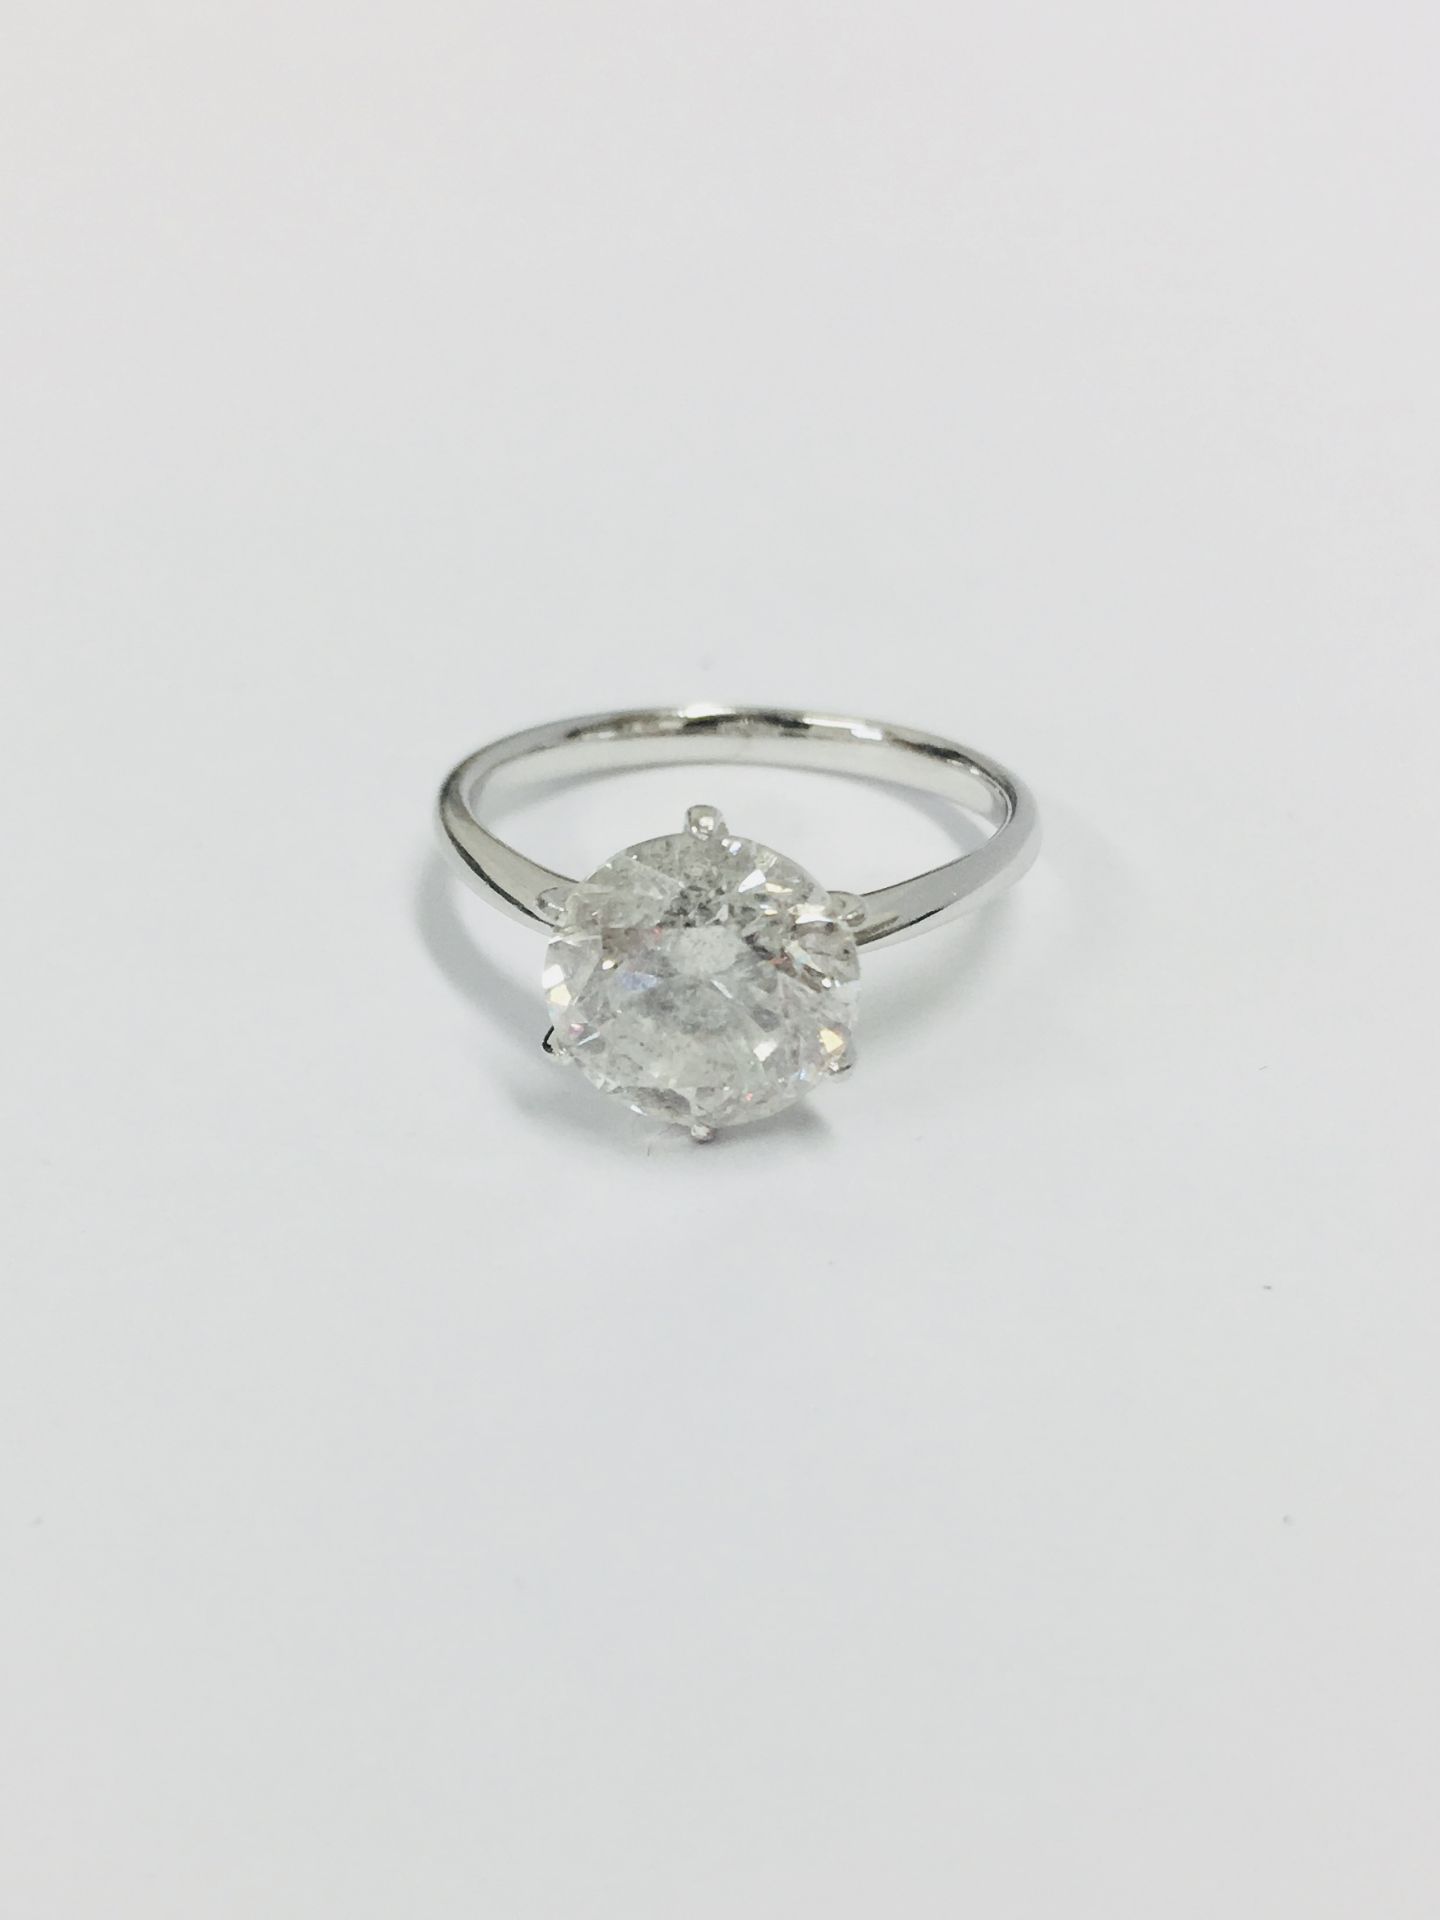 3.01ct brilliant cut natural diamond, I2 clarity I colour(clarity enhanced) ,platinum 6 claw - Image 2 of 4